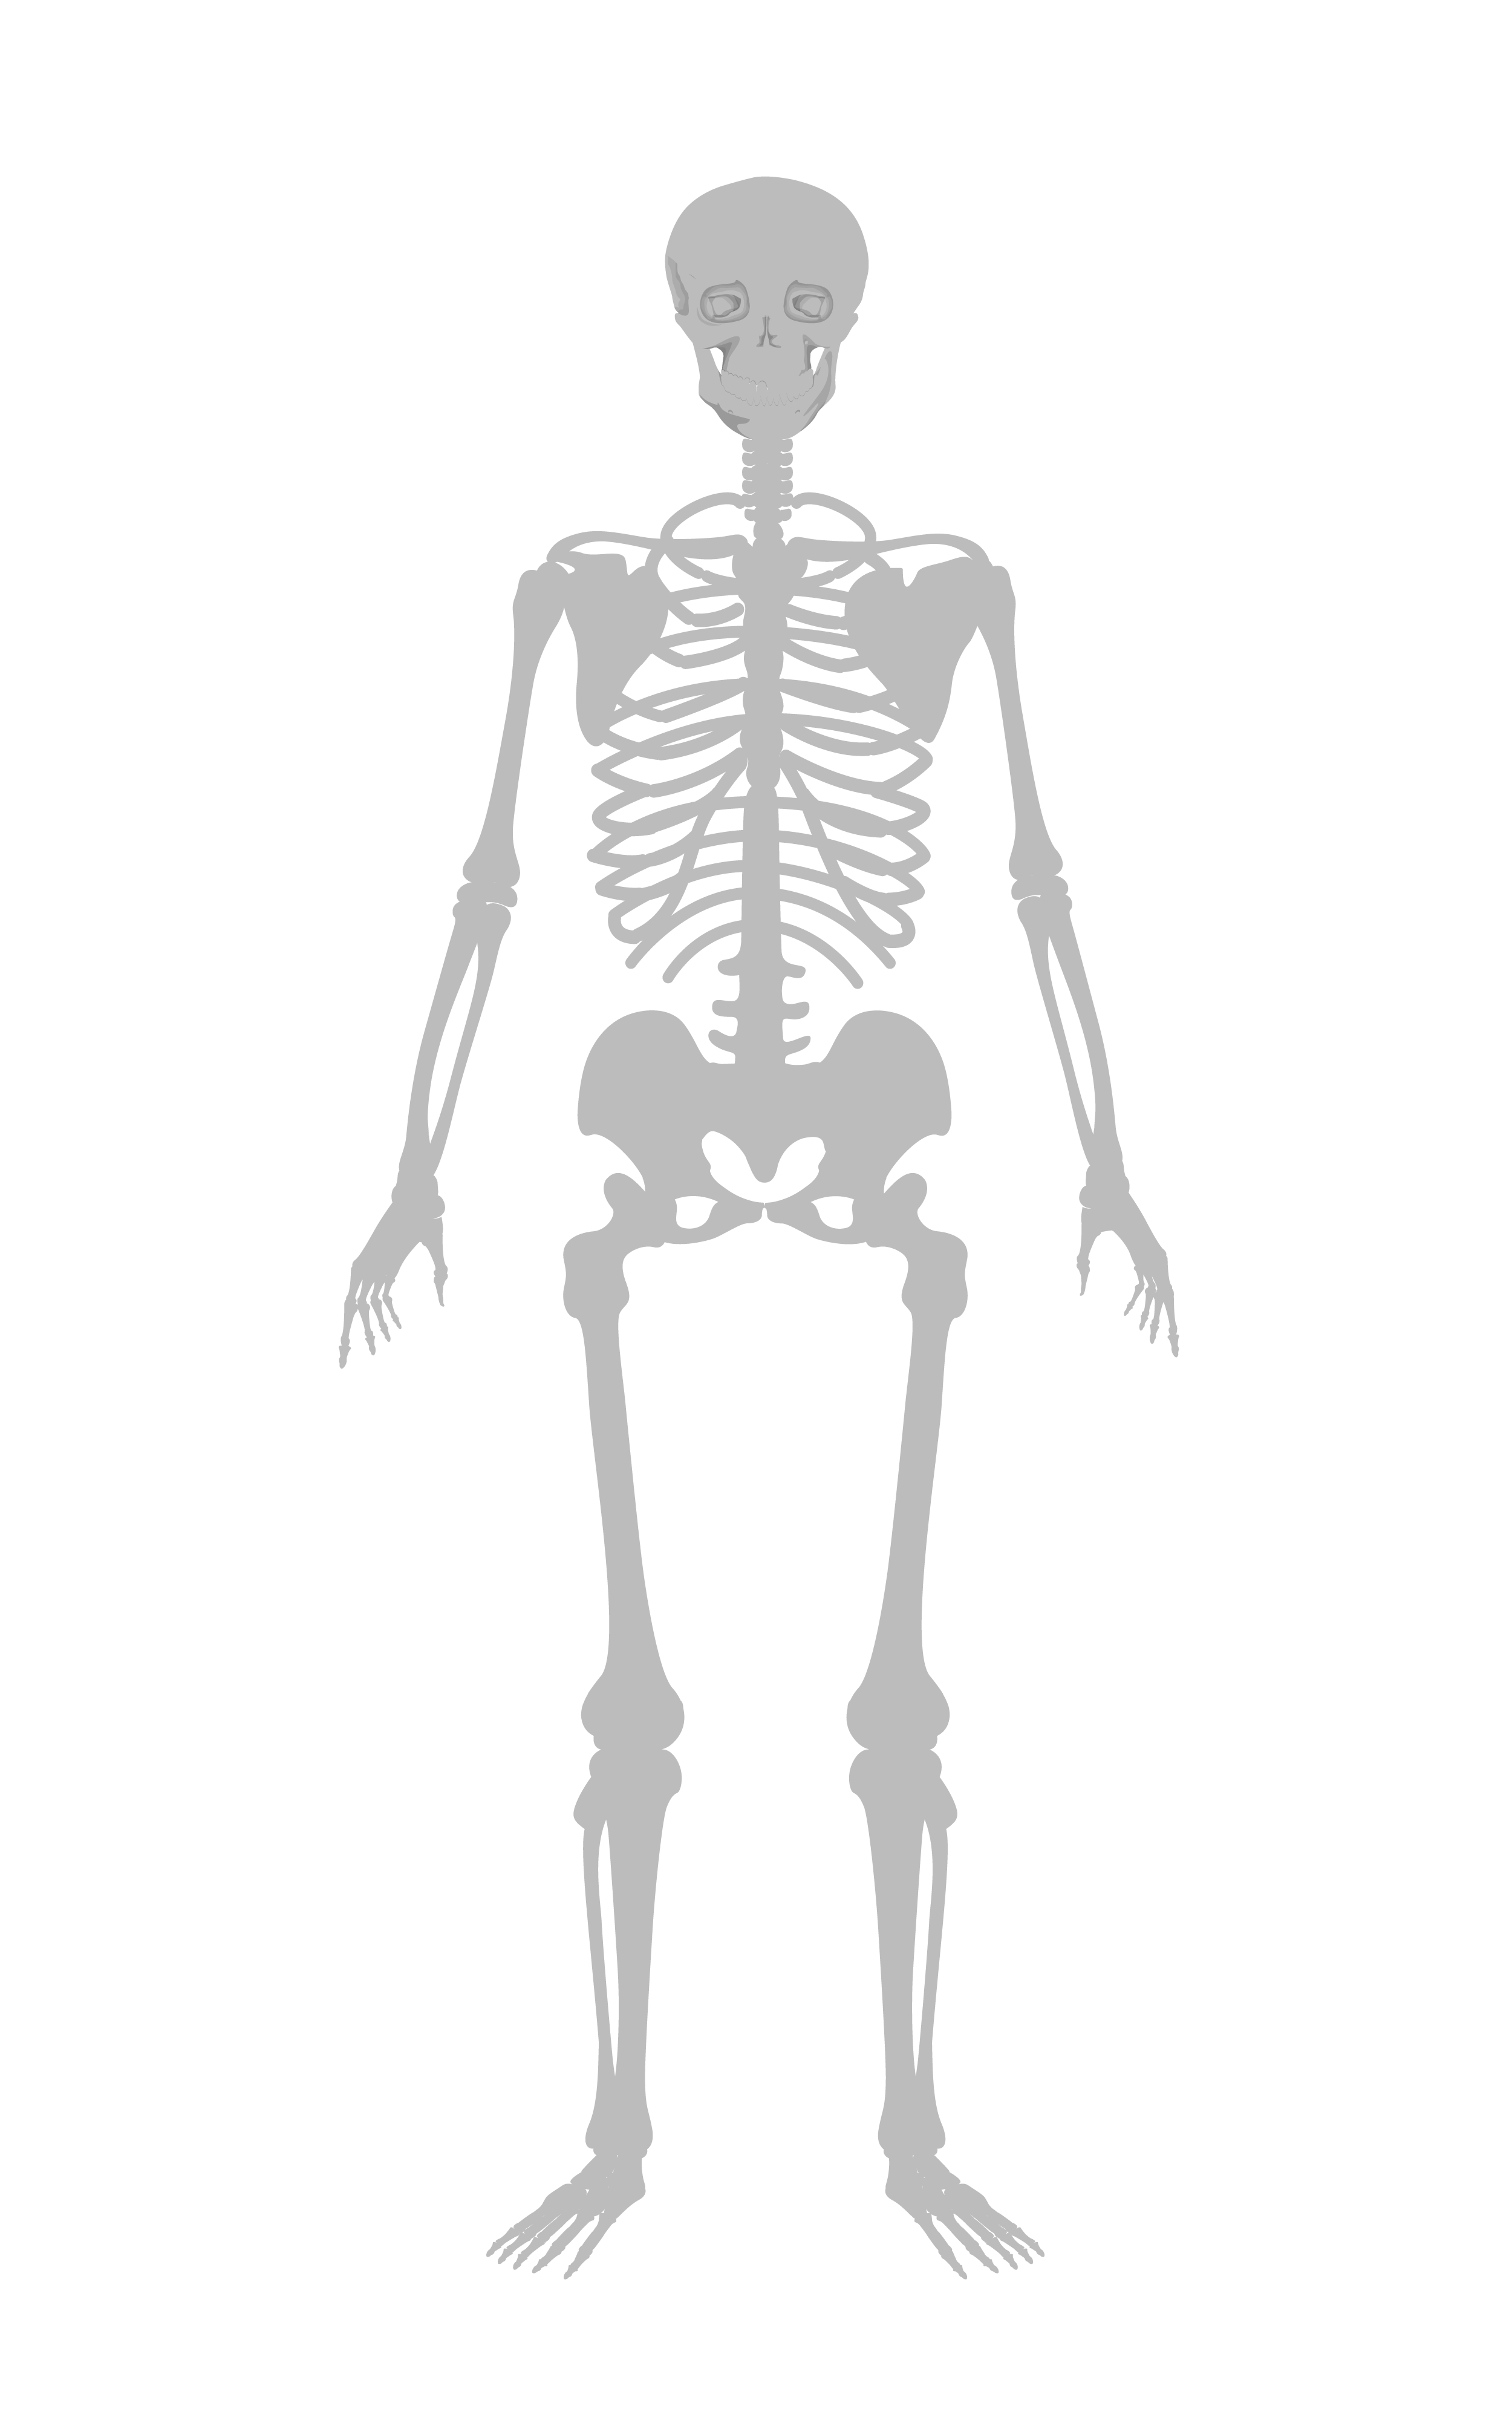 Pngtreehand drawn human bones illustration 4700636